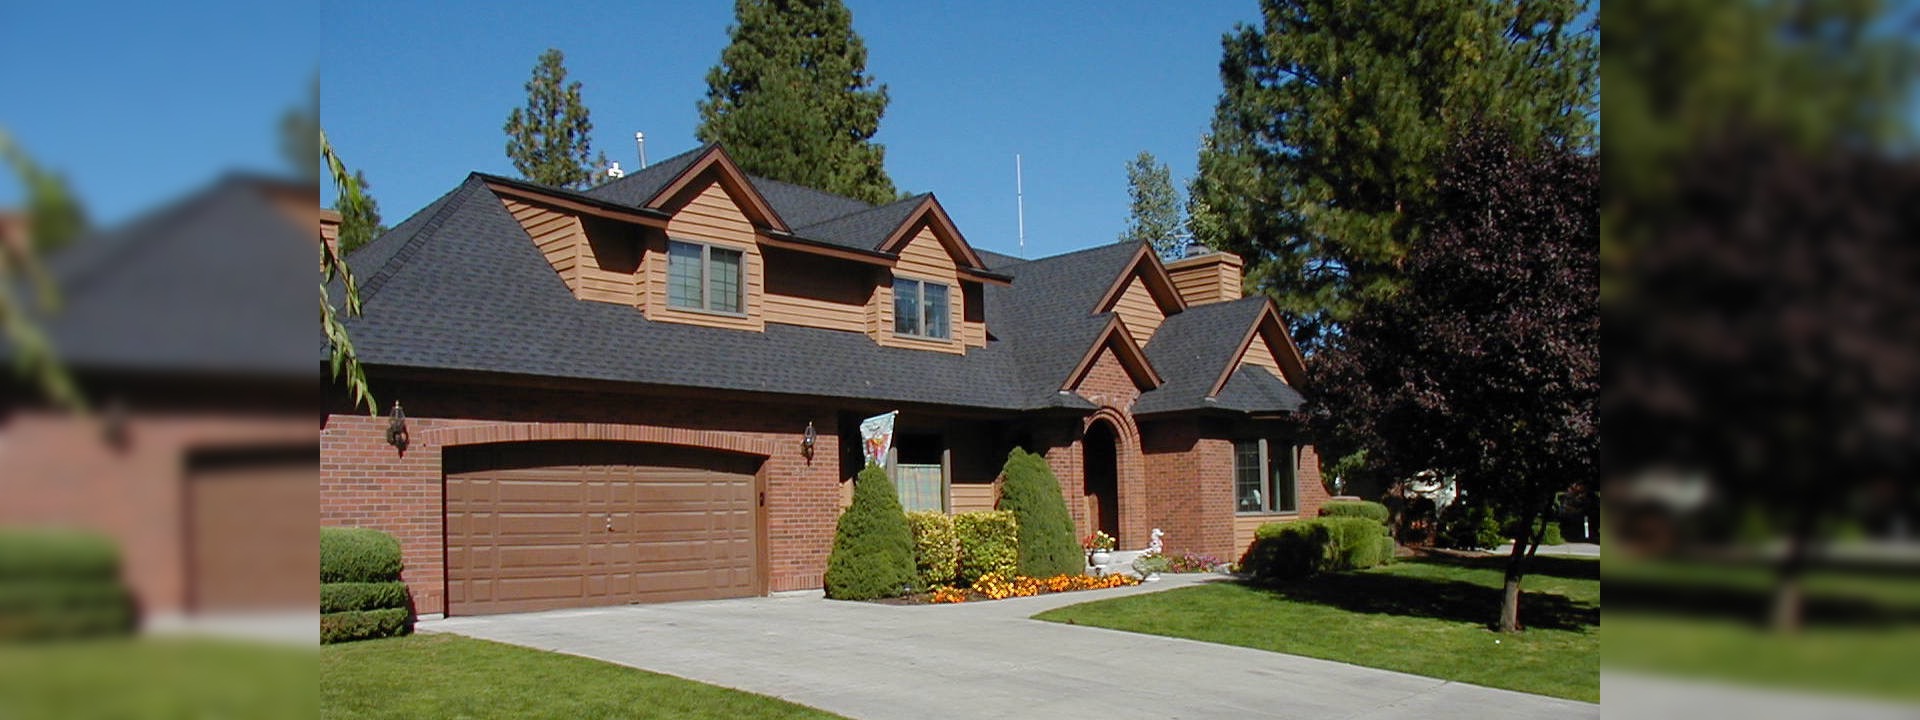 Modern, Brick Residence With Shingled Hip Roof And Dormers - Spokane, Washington